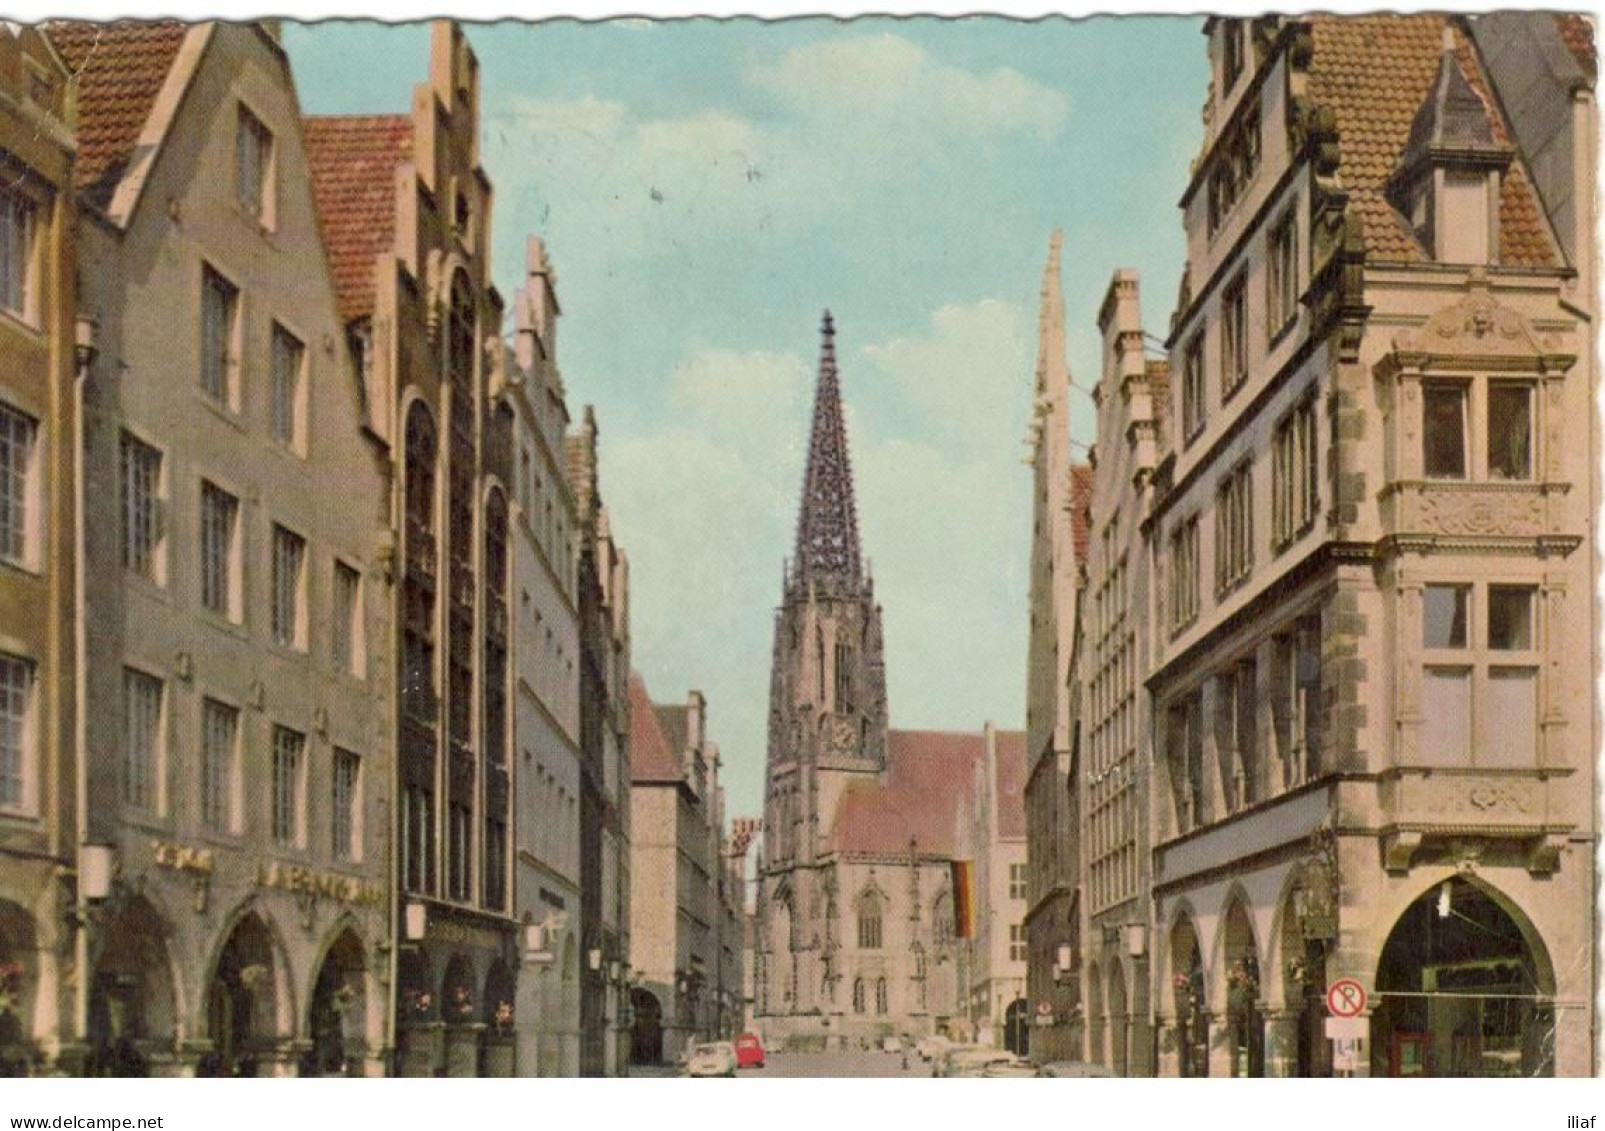 Germany. Münster-a City In North Rhine-Westphalia. Prinzipalmarkt Und St. Lamberti. Illustrated View Posted Postcard - Muenster